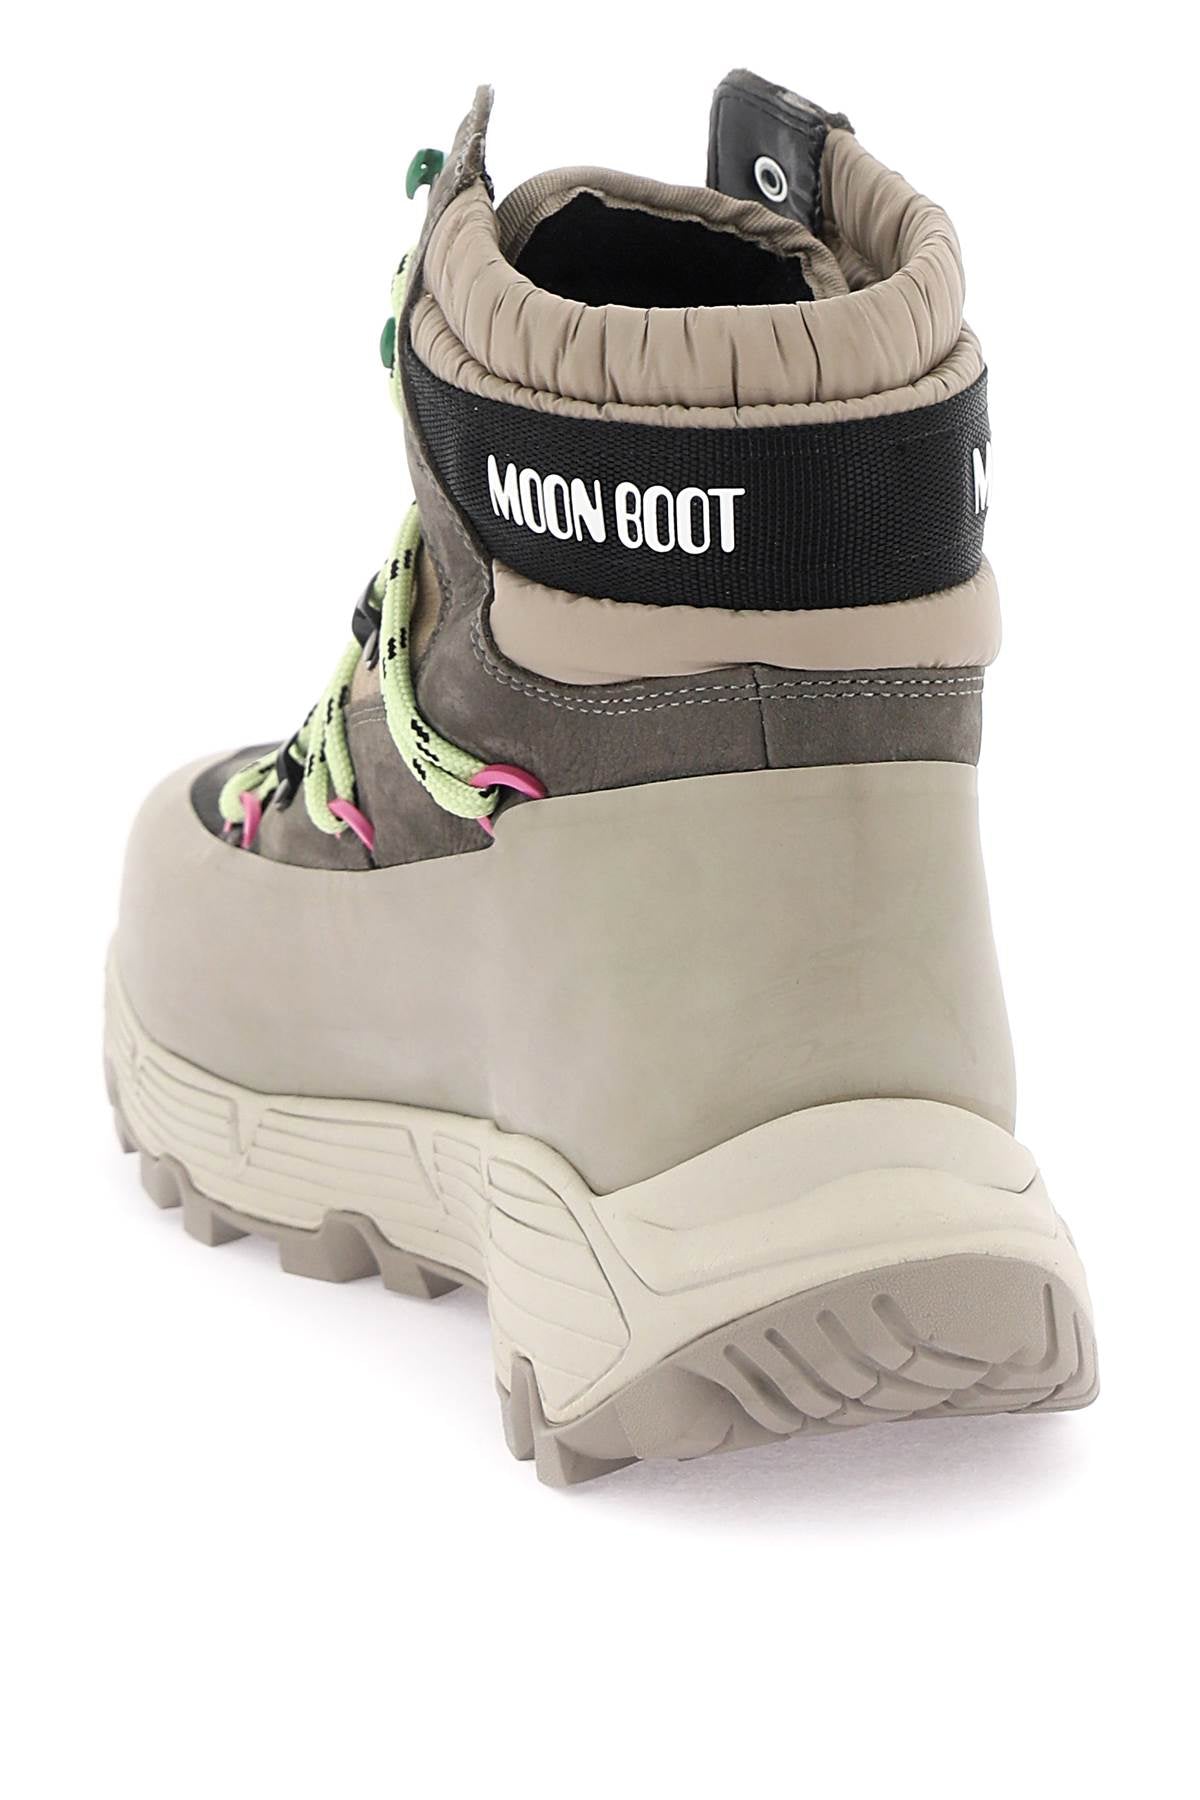 Moon Boot Moon boot tech hiker hiking boots